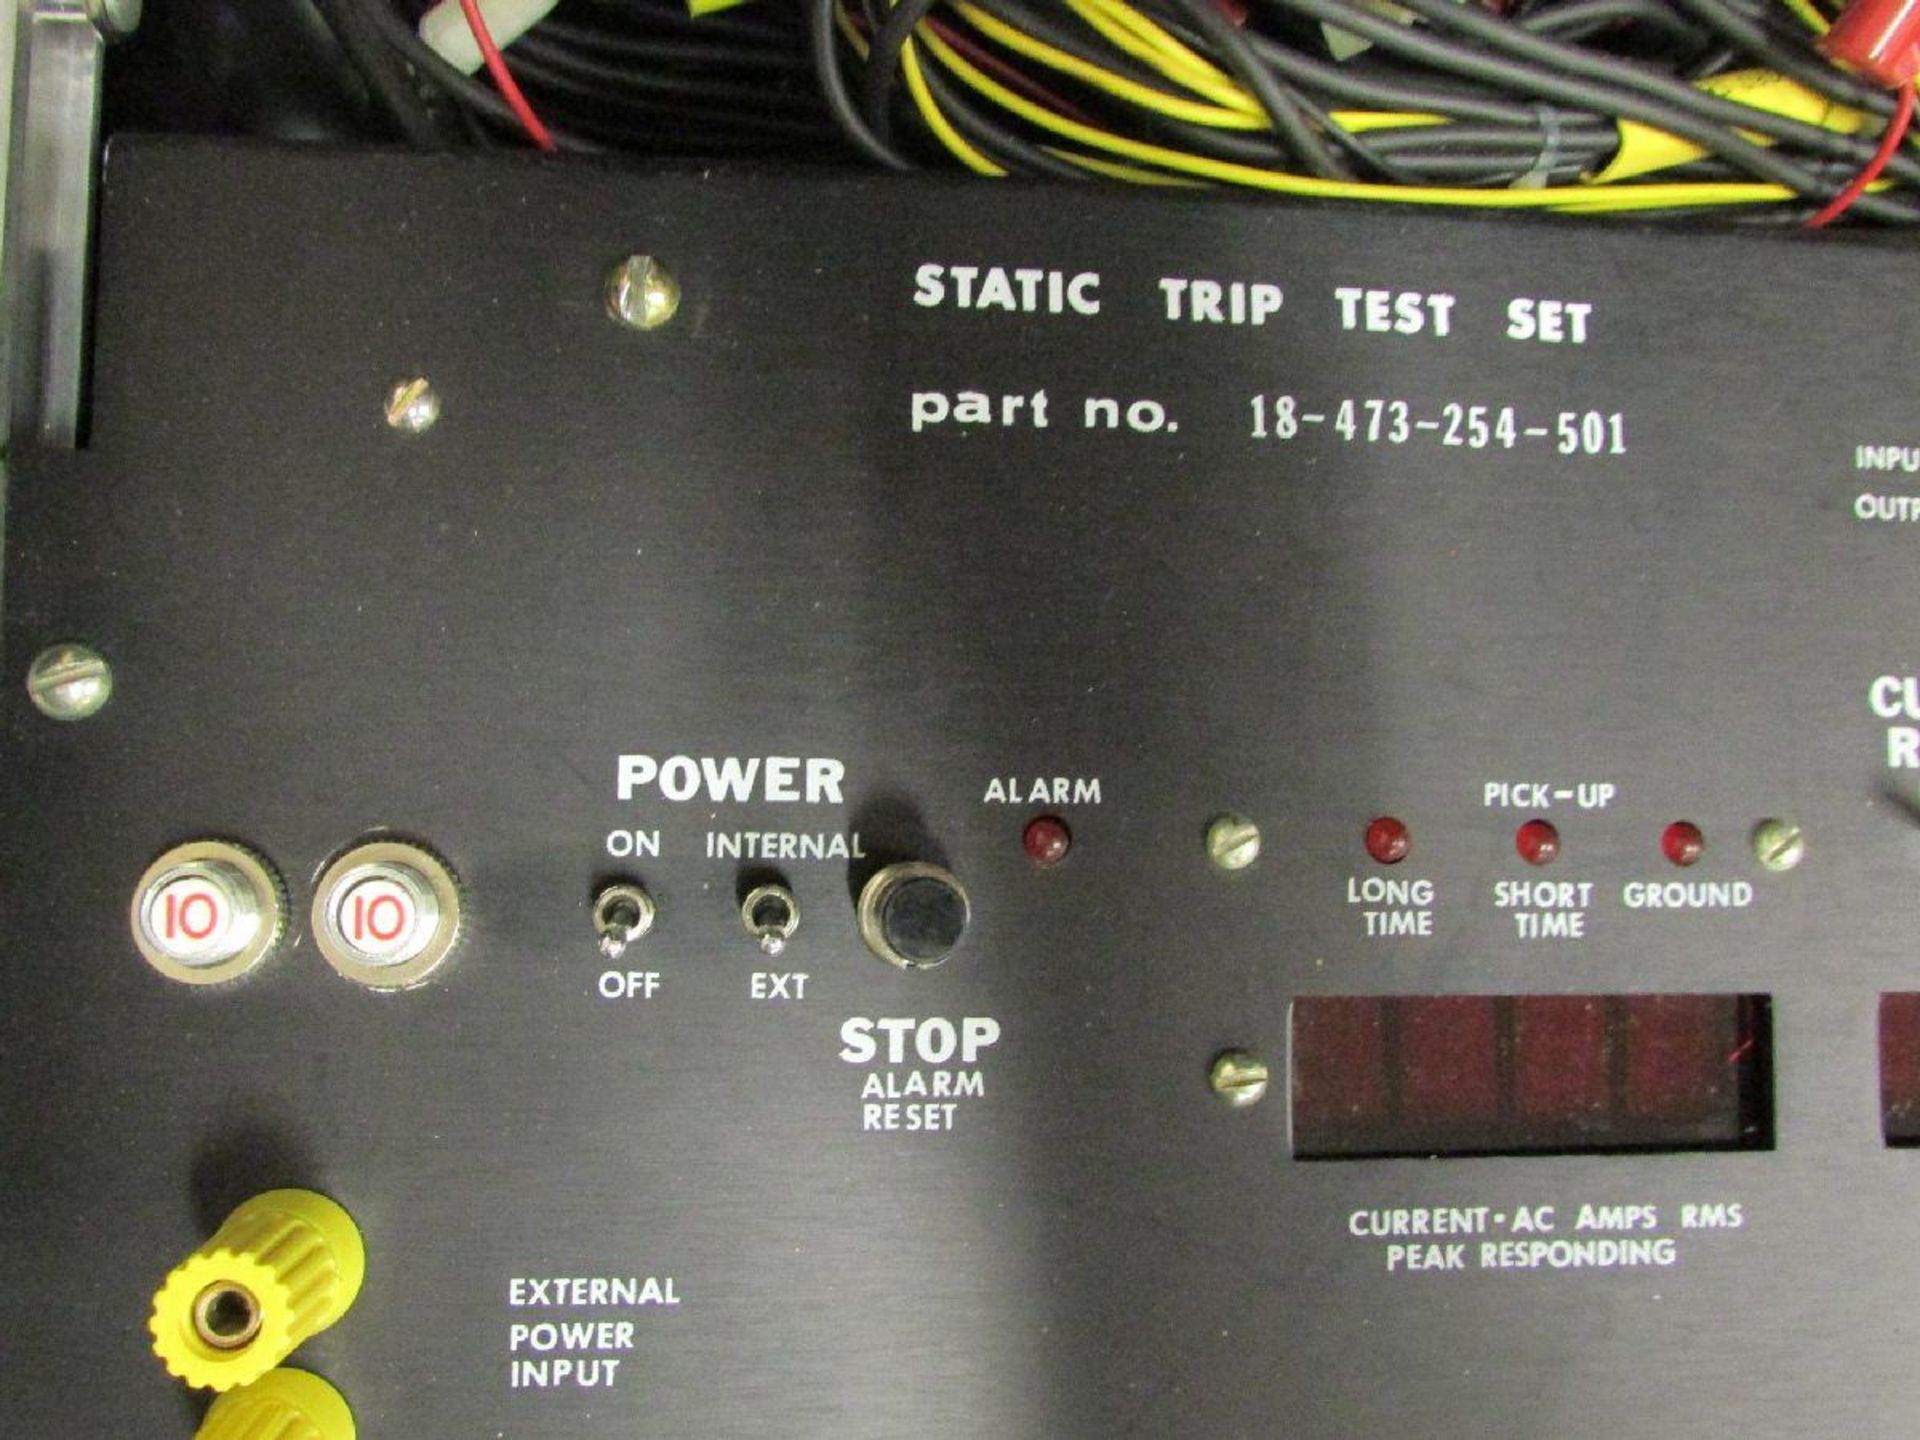 Siemens-Allis Model PTS 3 Static Trip Tester - Image 2 of 4